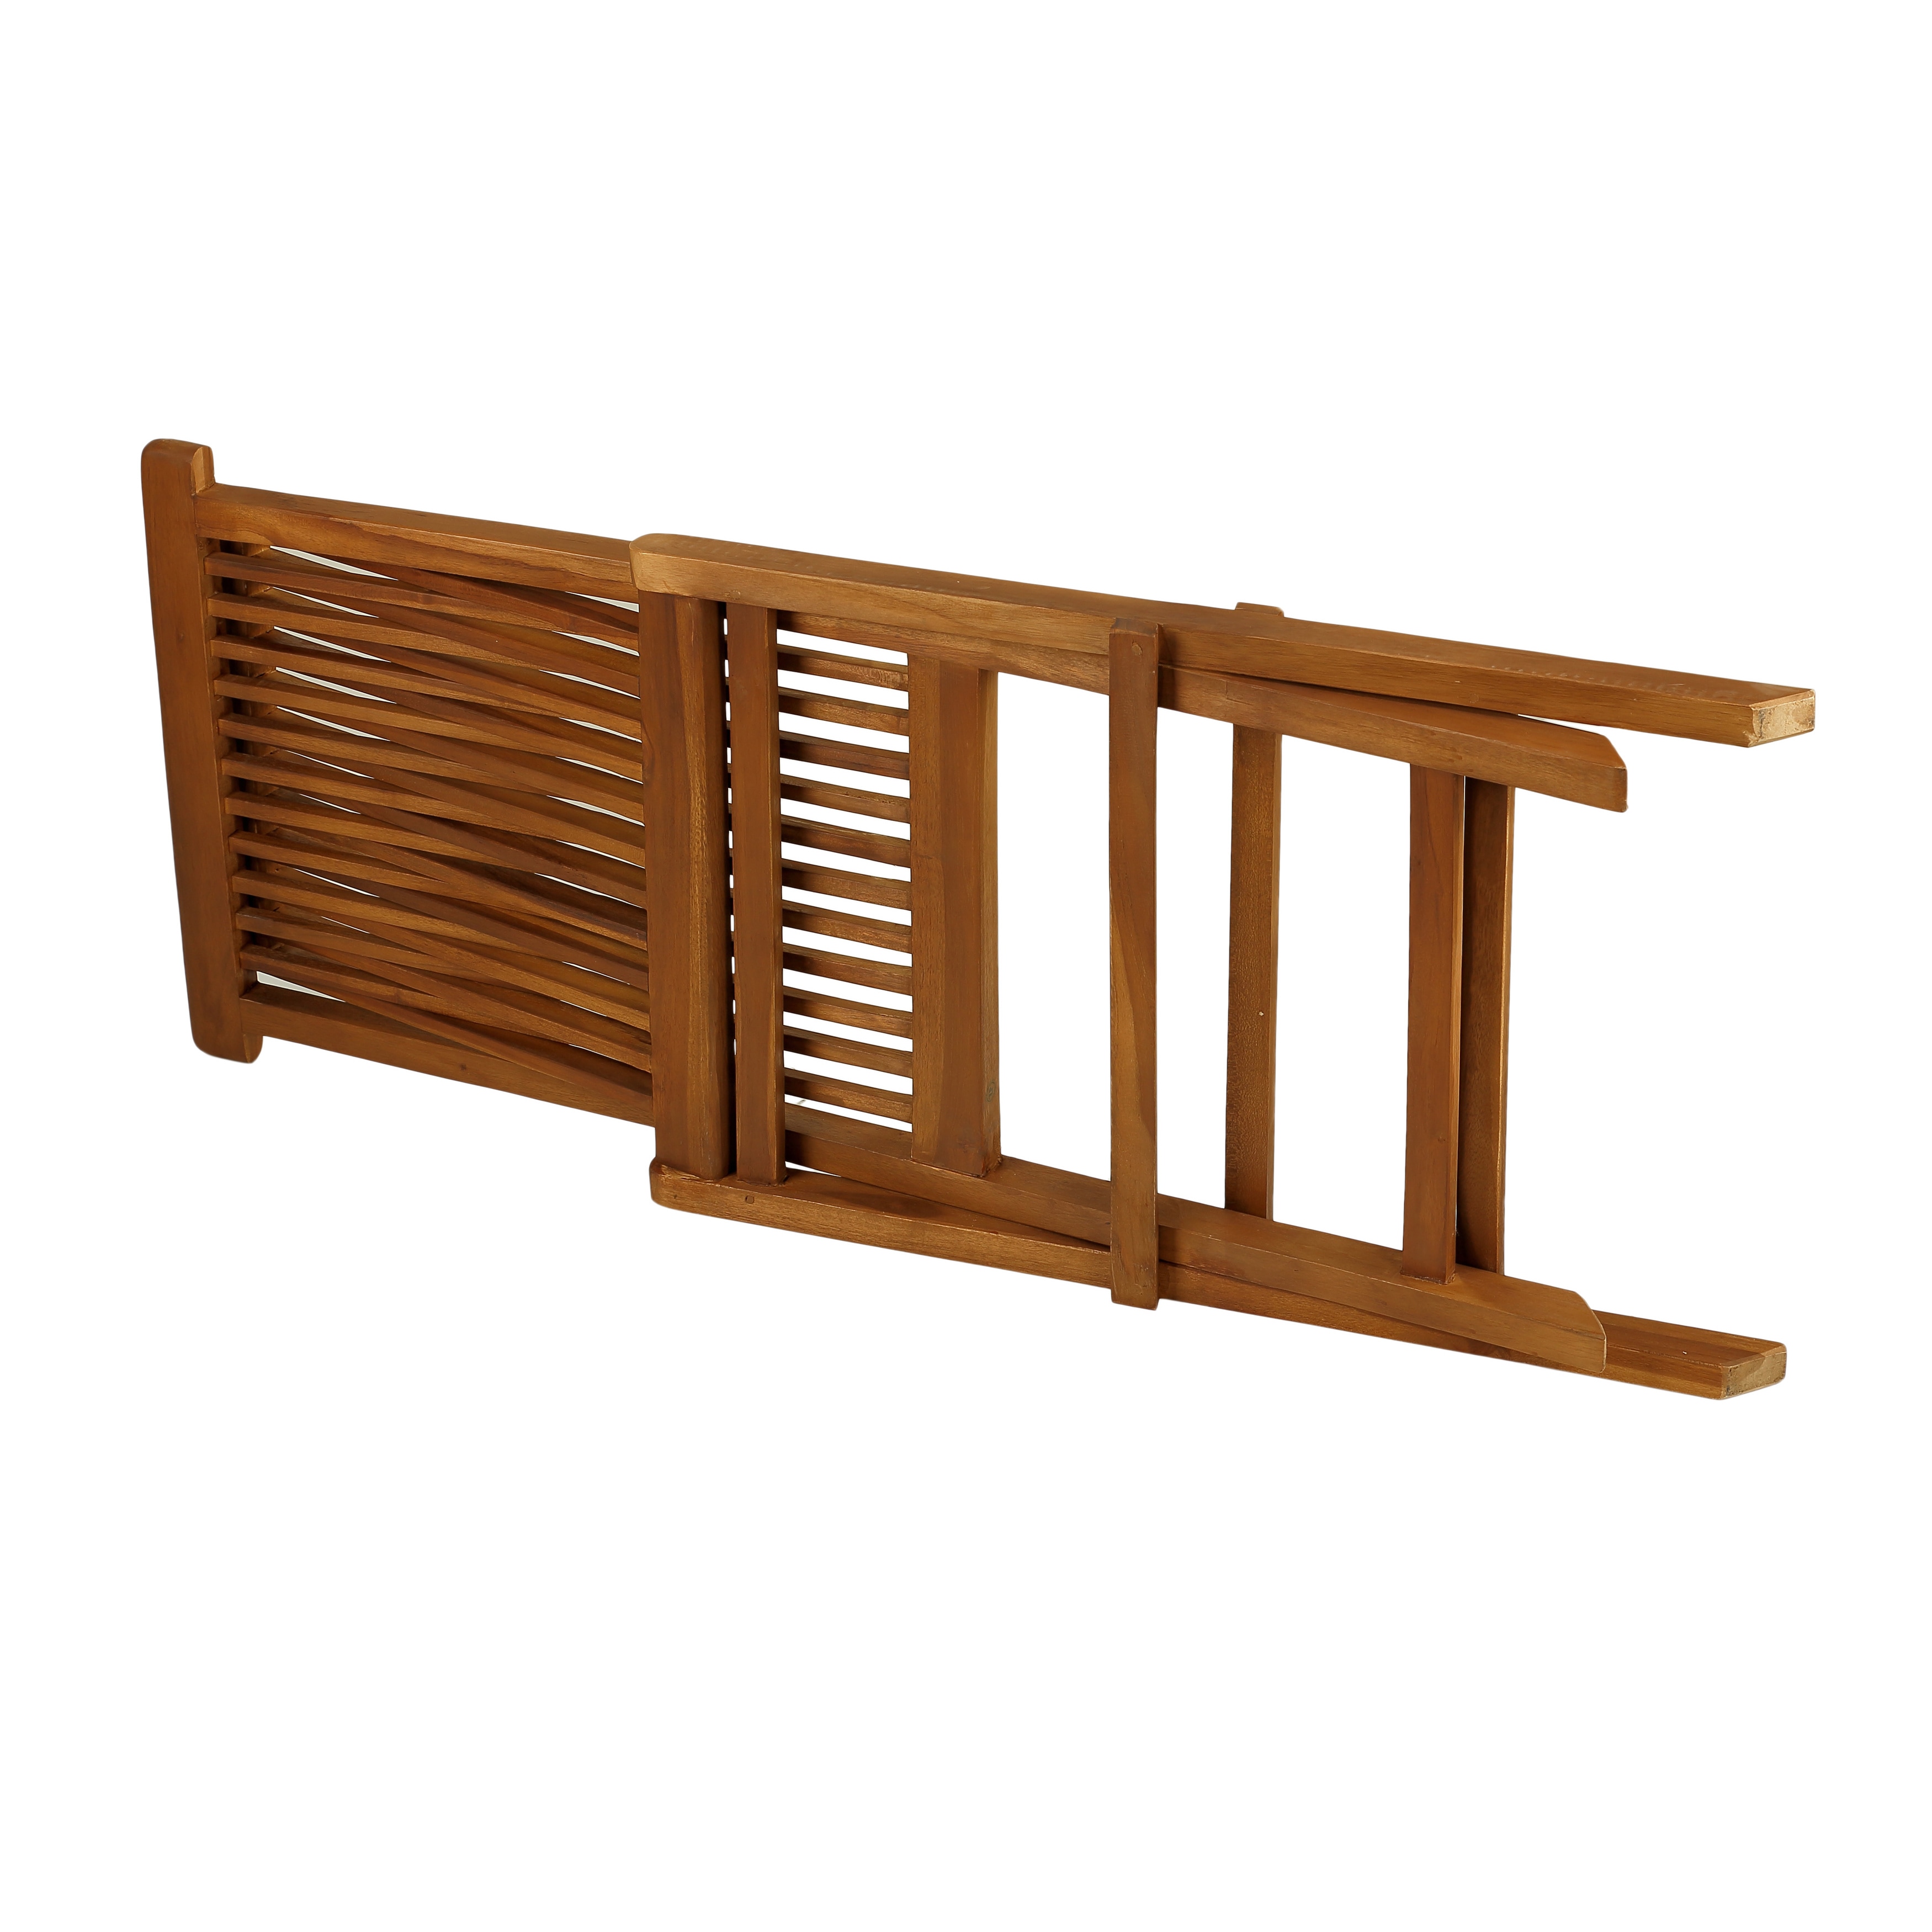 Bare Decor  Vega Golden Teak Wood Outdoor Folding Chair (Set of 2) - image 4 of 4